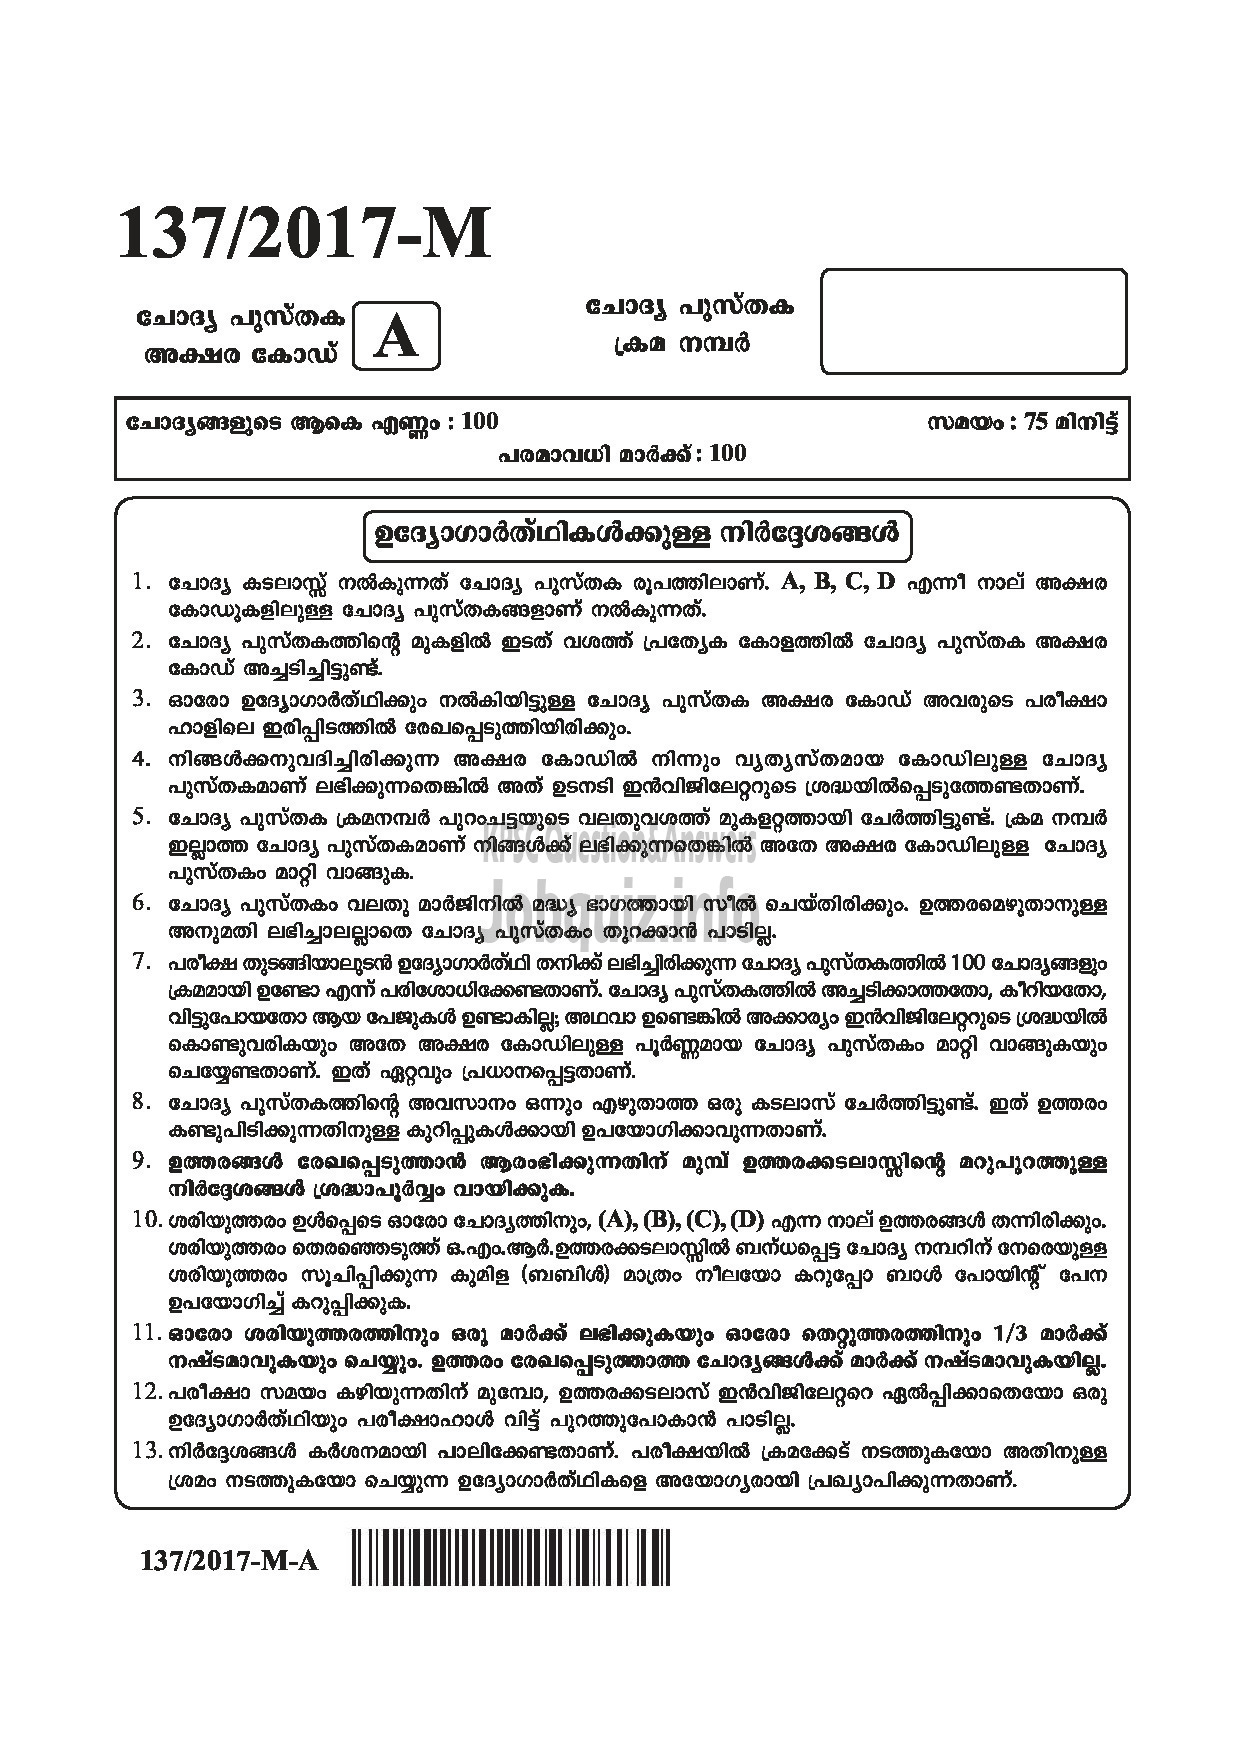 Kerala PSC Question Paper - VILLAGE FIELD ASSISTANT REVENUE KOLLAM ERNAKULAM MALAPPURAM KASARAGOD MEDIUM OF QUESTION MALAYALAM-1